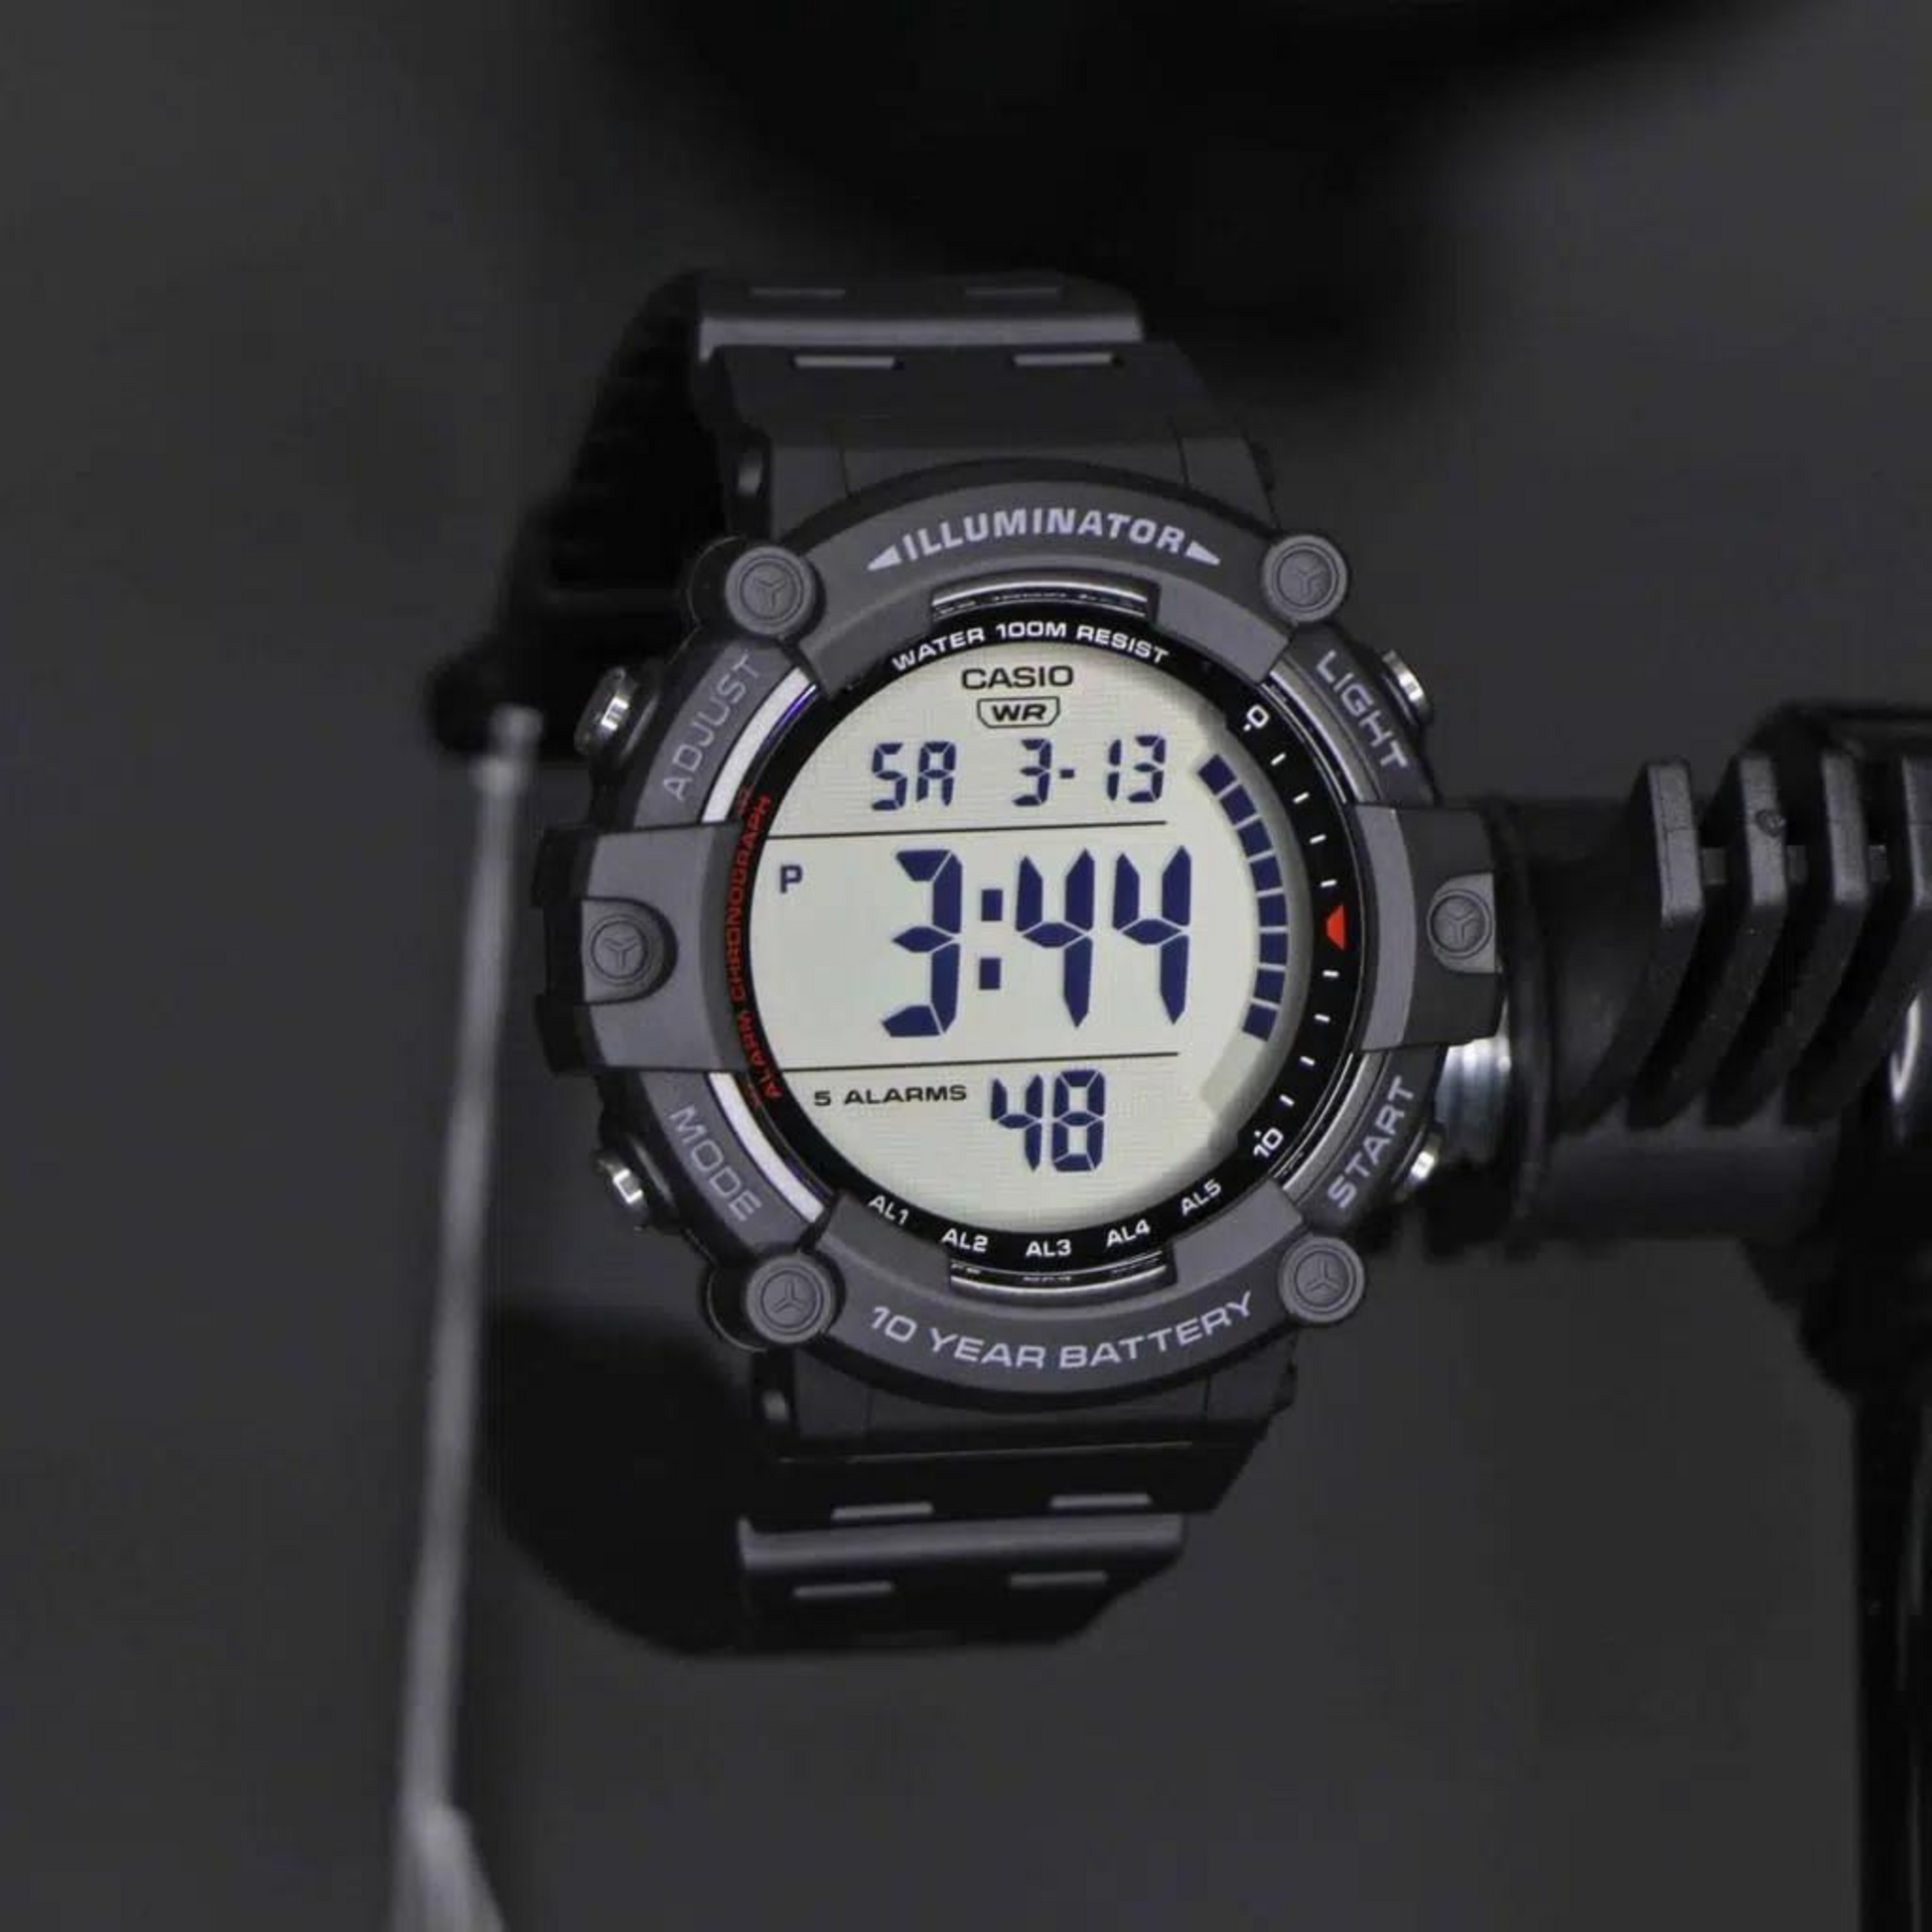 Reloj Casio Digital Hombre AE-1500WH-1AV